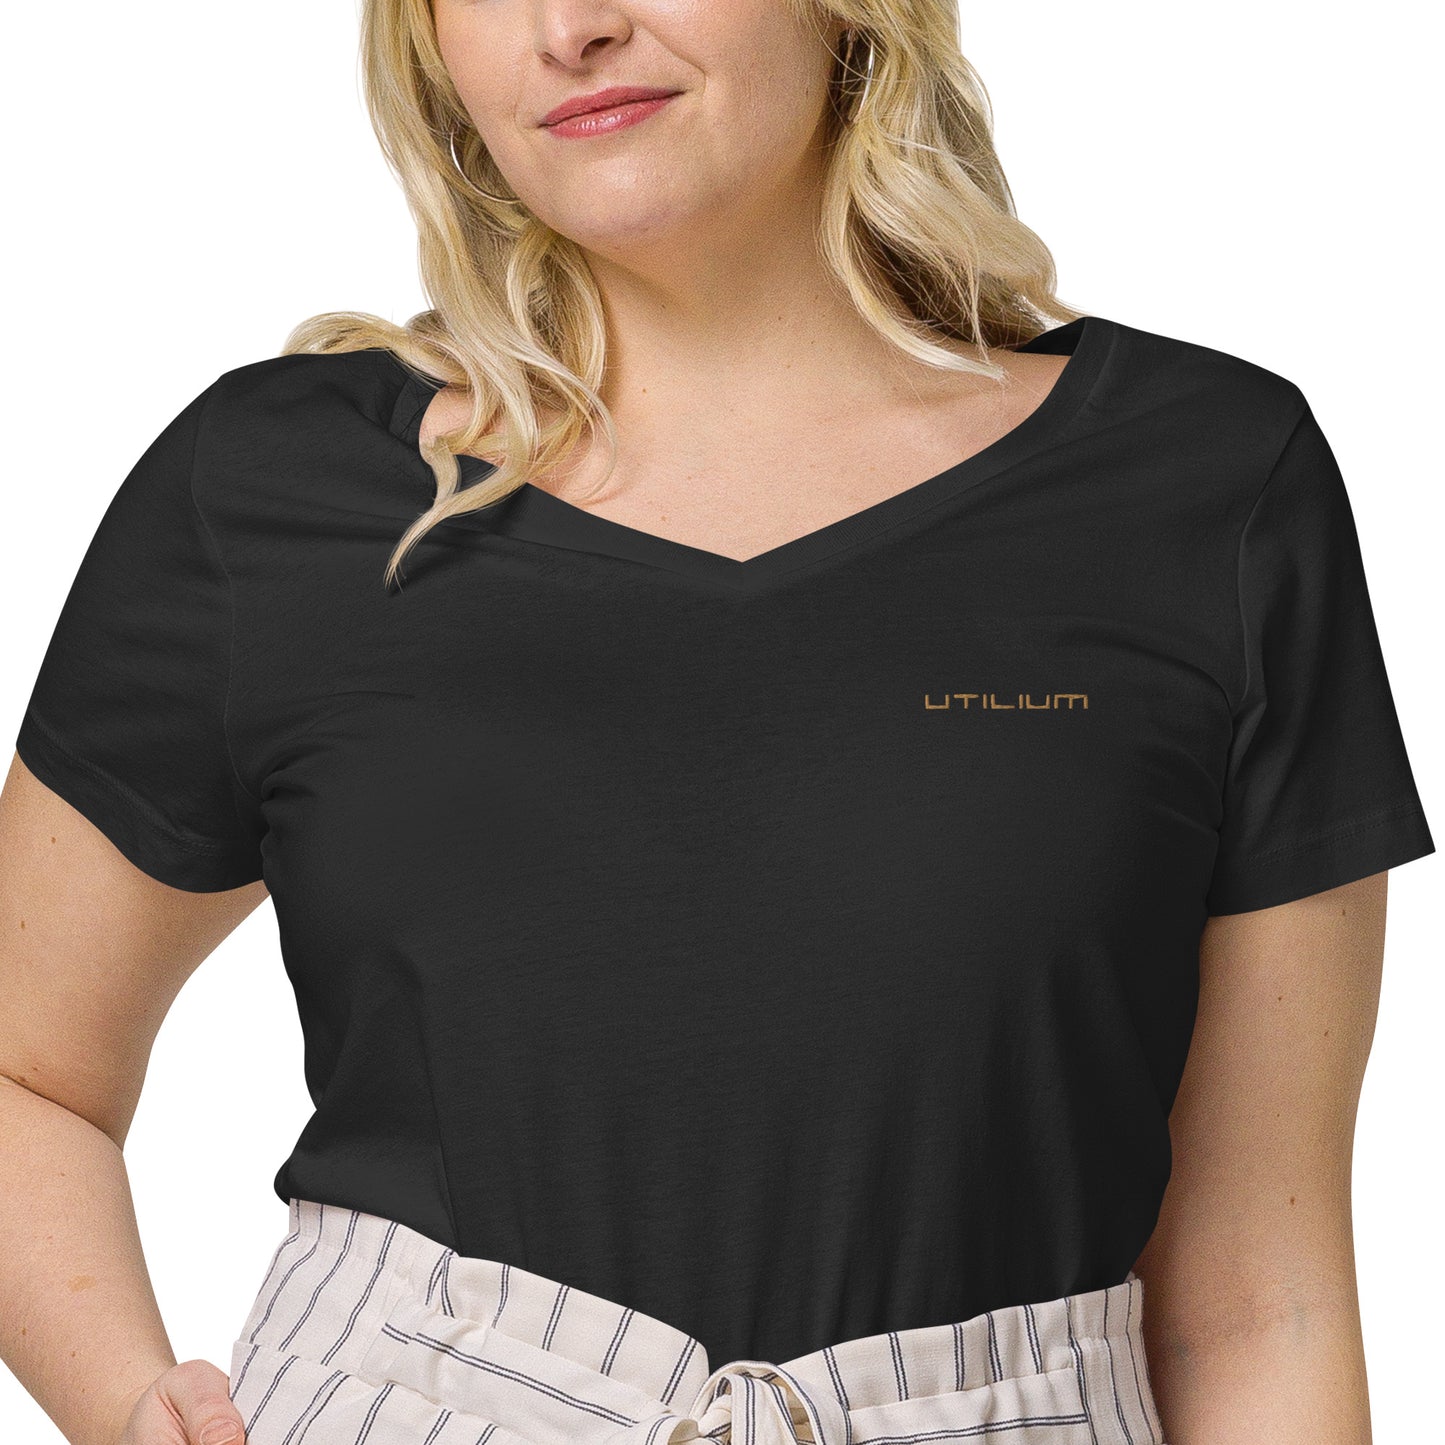 Utilium Women’s fitted v-neck t-shirt